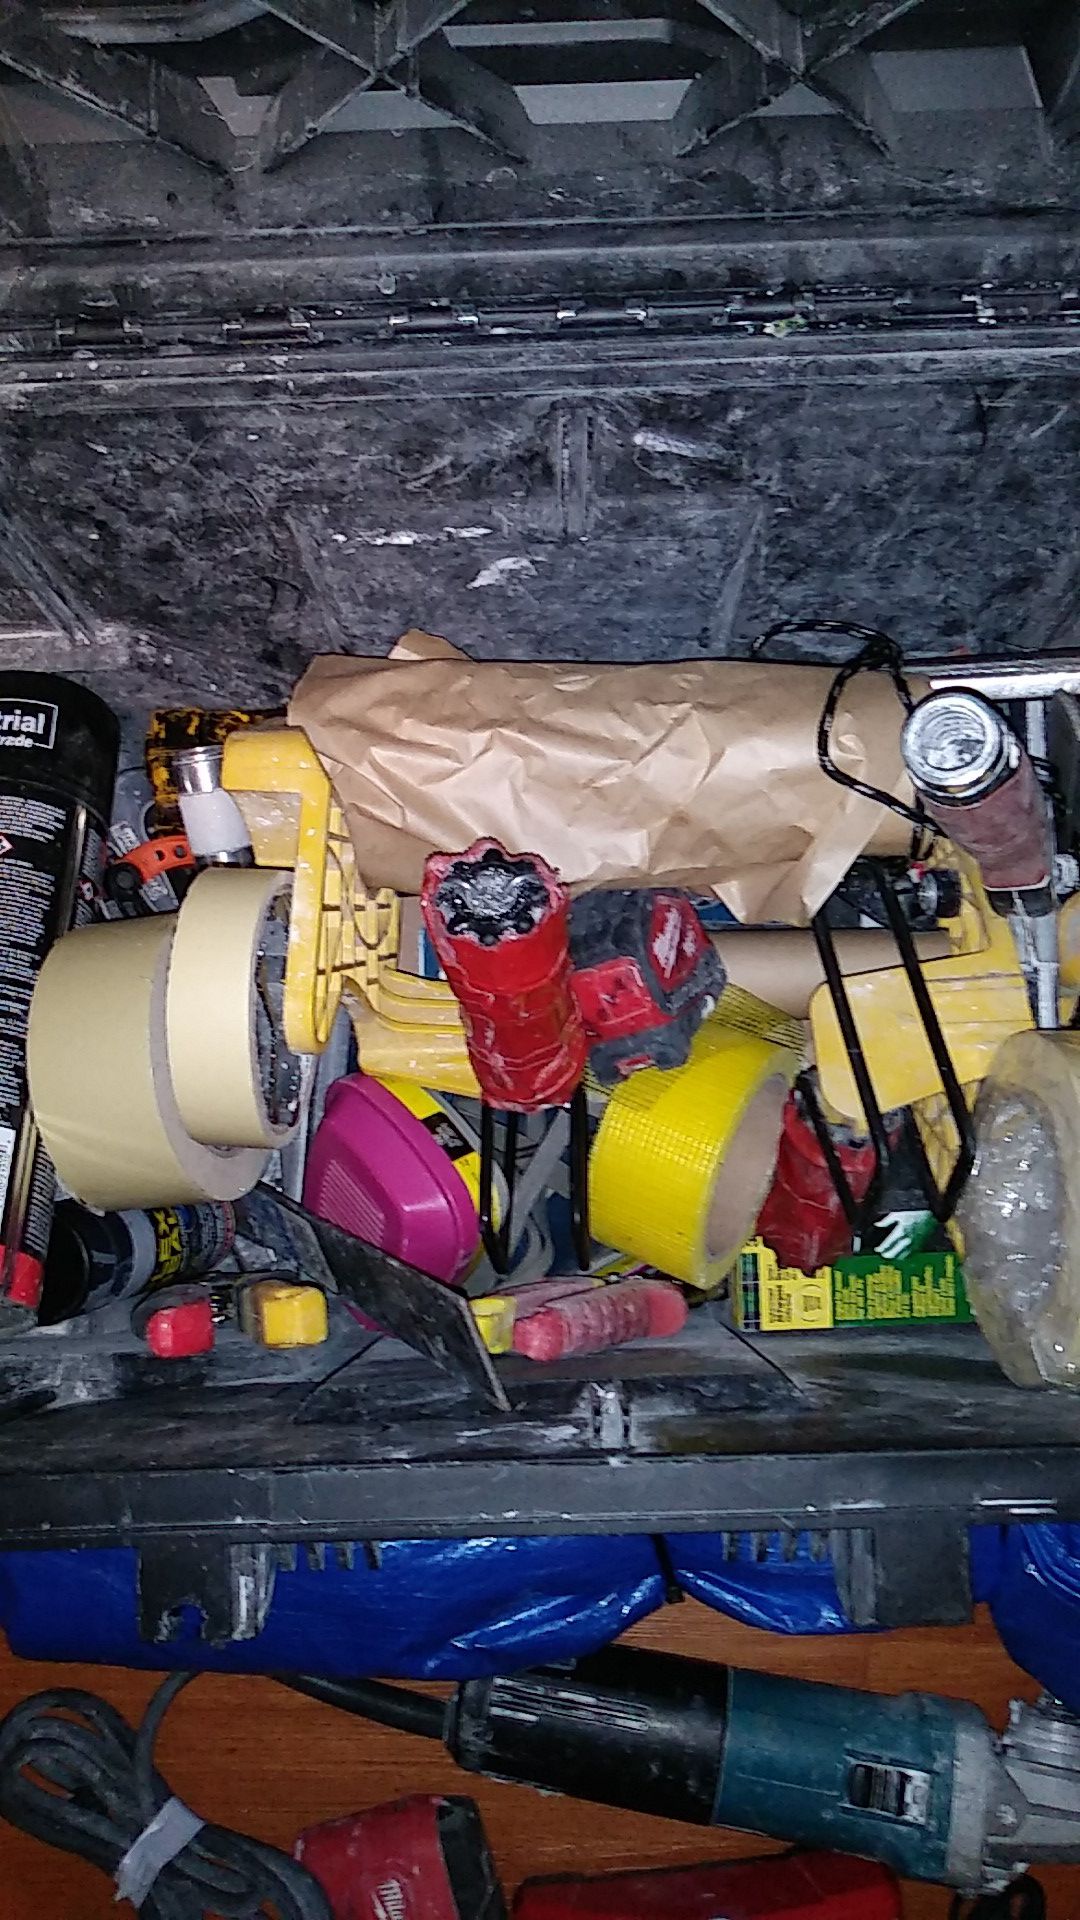 Misc drywall tools and dewalt box